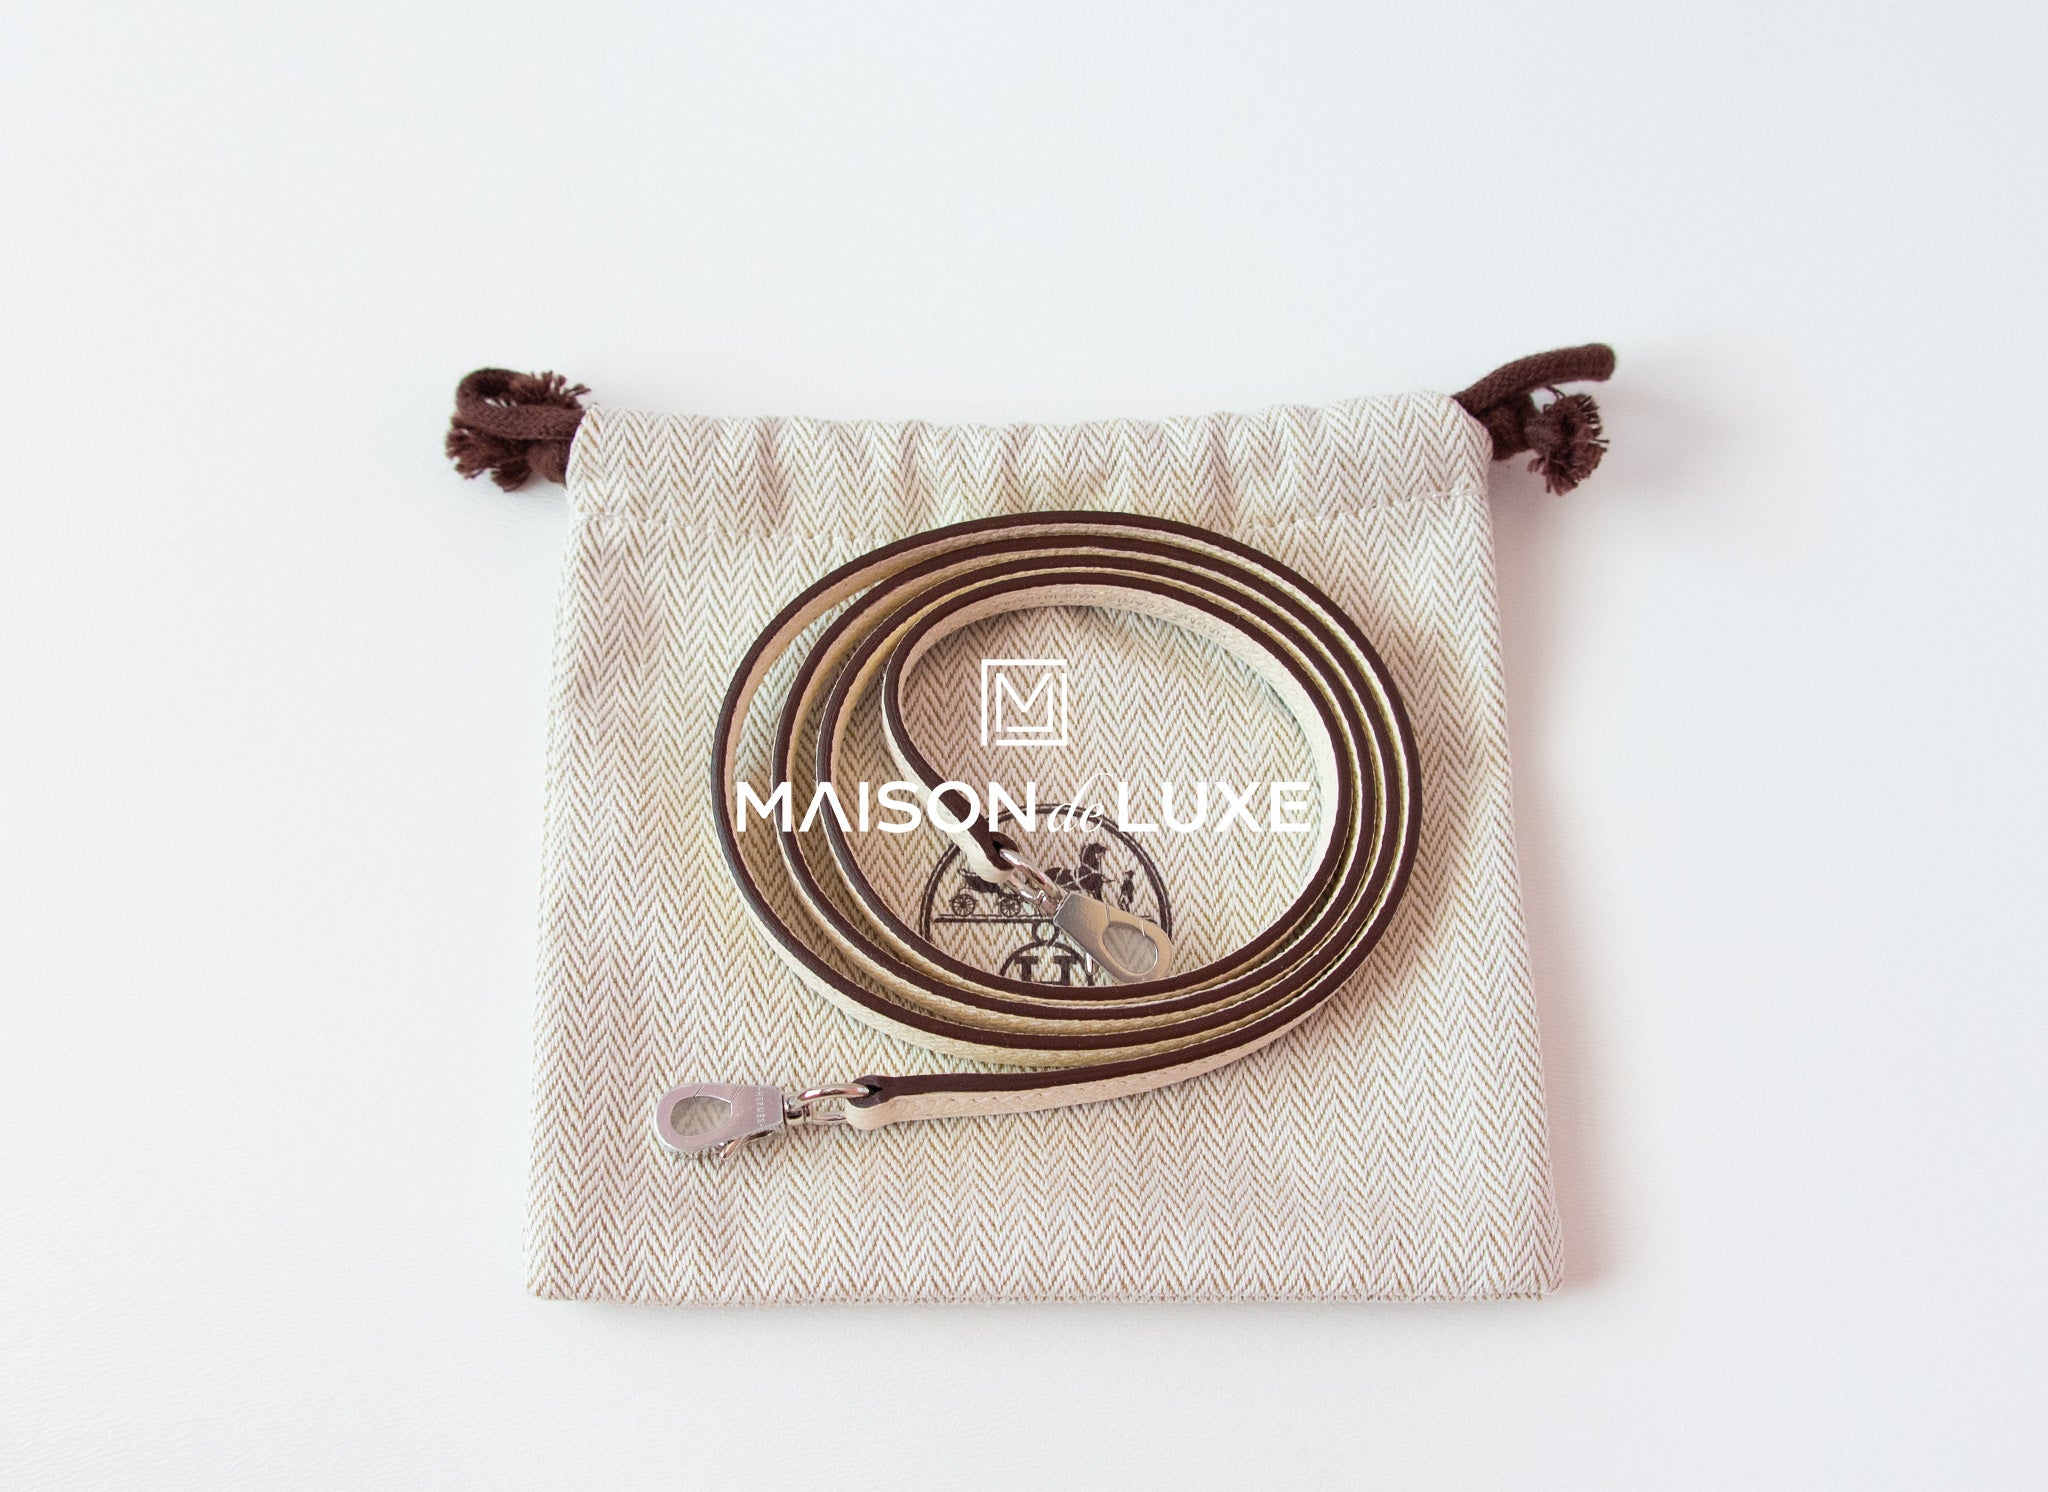 Look at this! 👀 New in stock! Hermès Mini Kelly II Nata Boreal